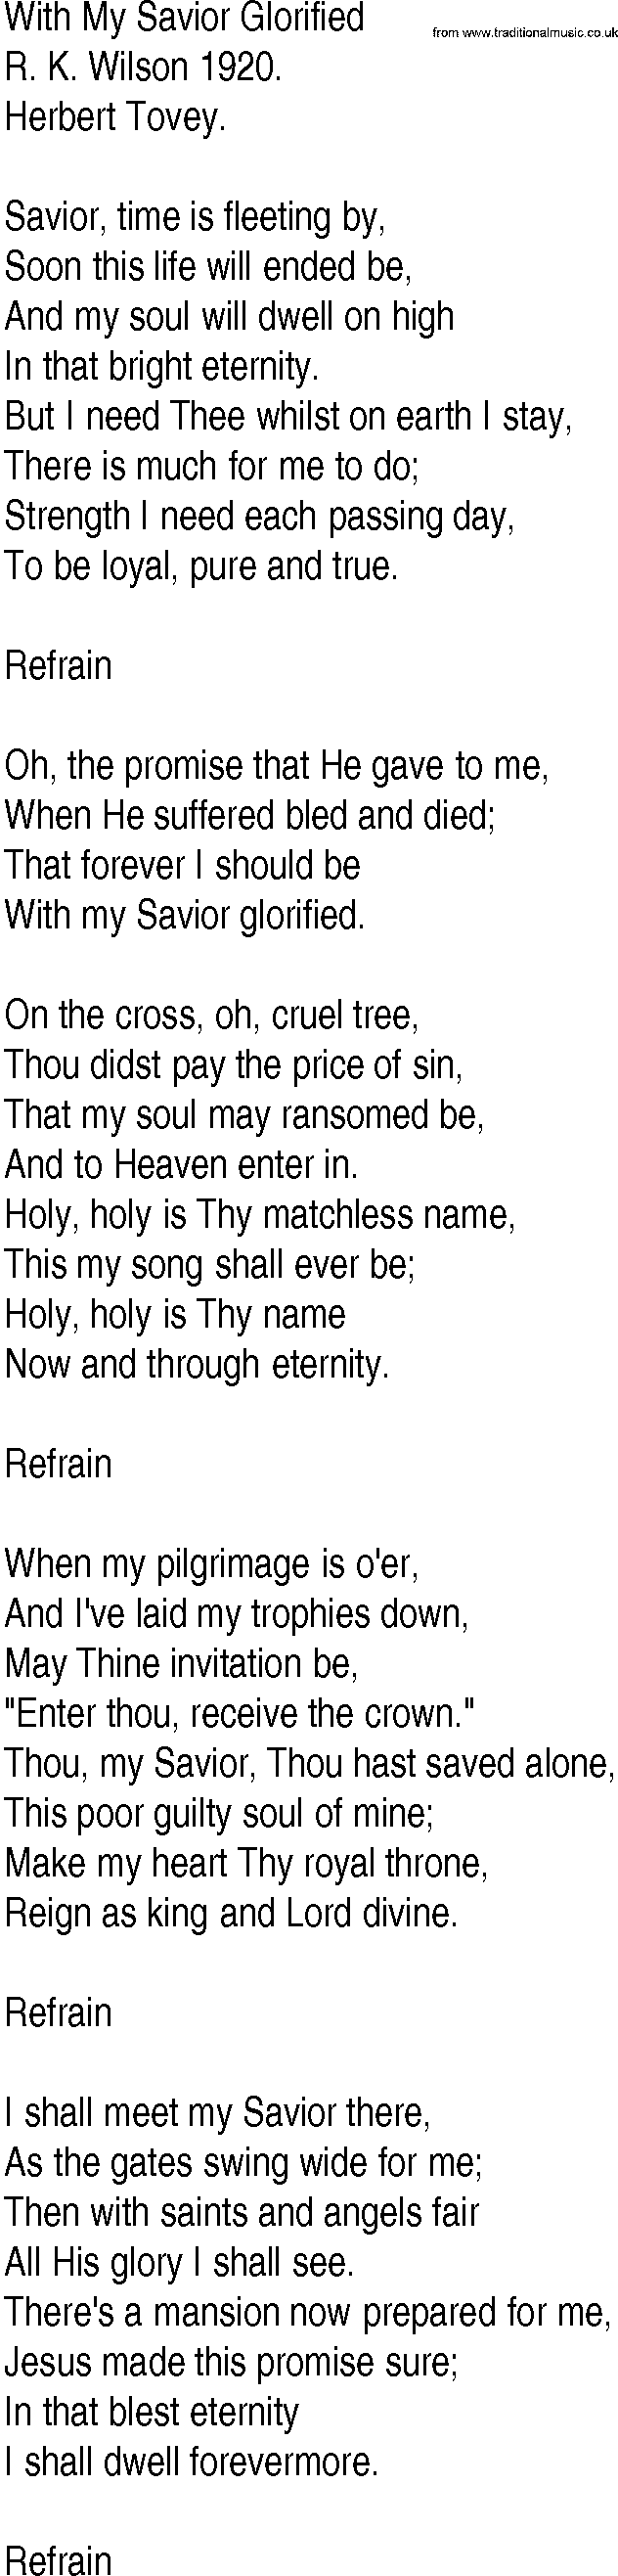 Hymn and Gospel Song: With My Savior Glorified by R K Wilson lyrics